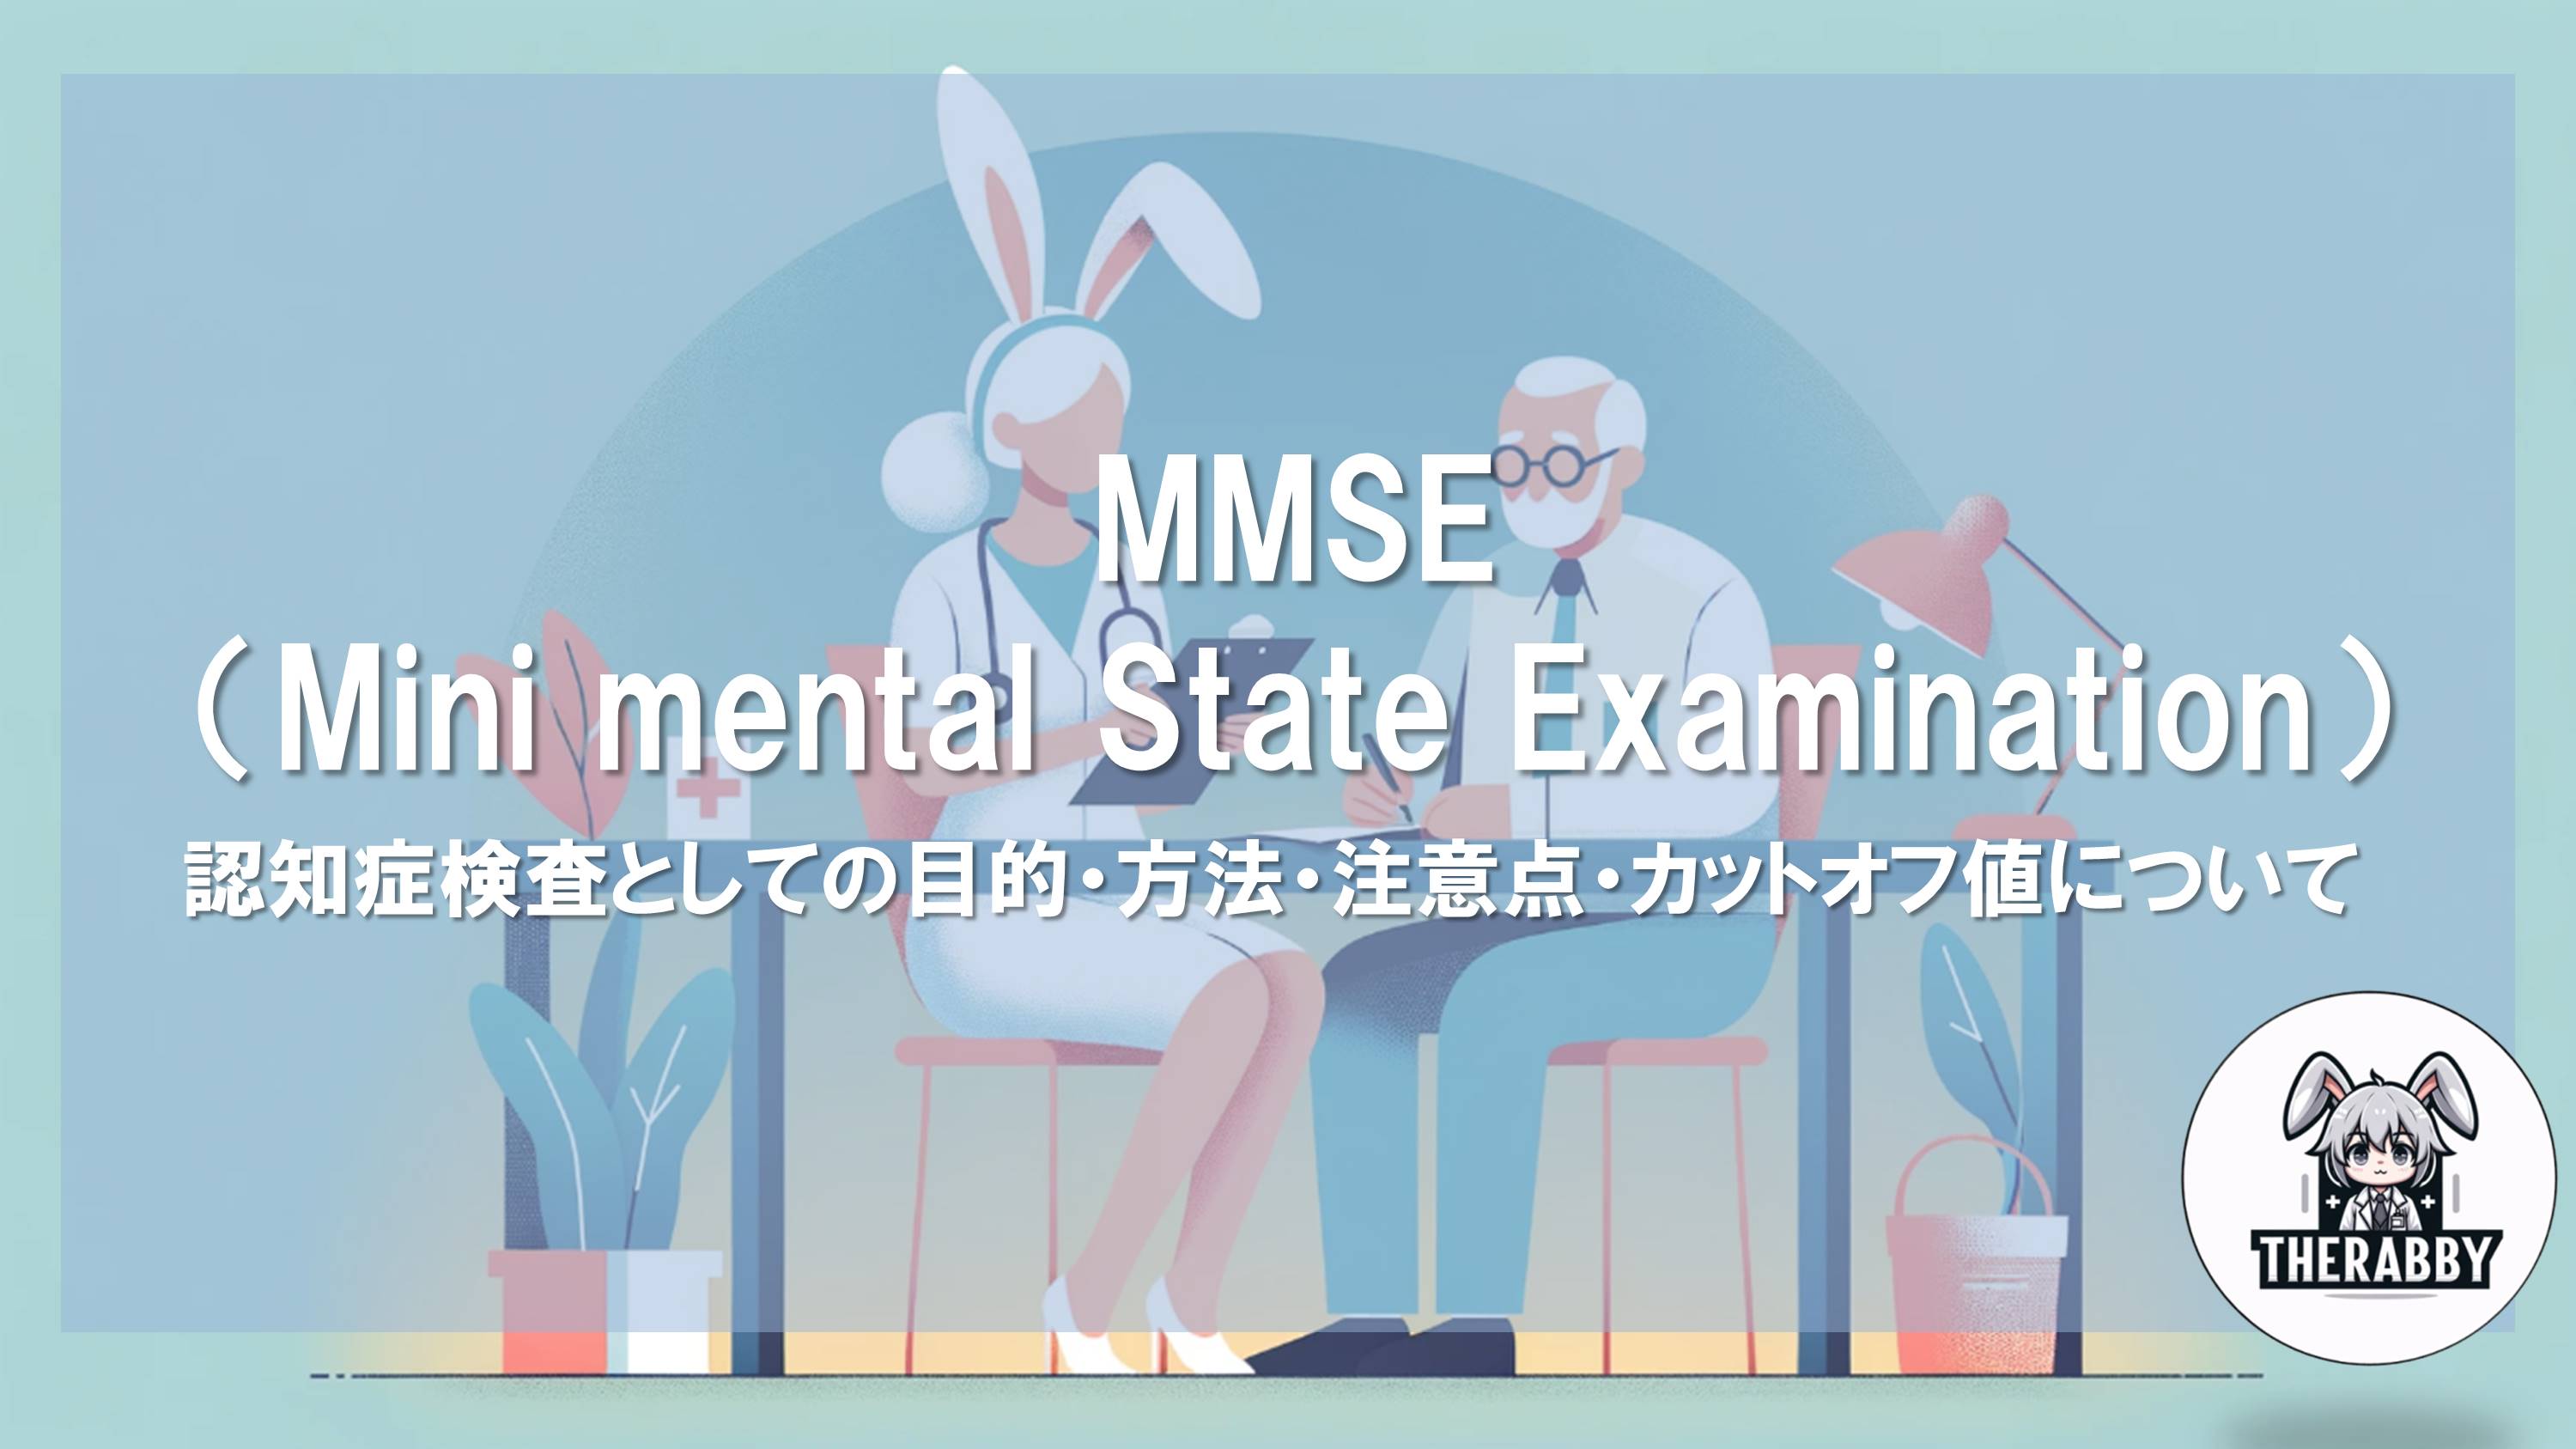 MMSE（Mini mental State Examination） - 認知症検査としての目的・方法・注意点・カットオフ値について